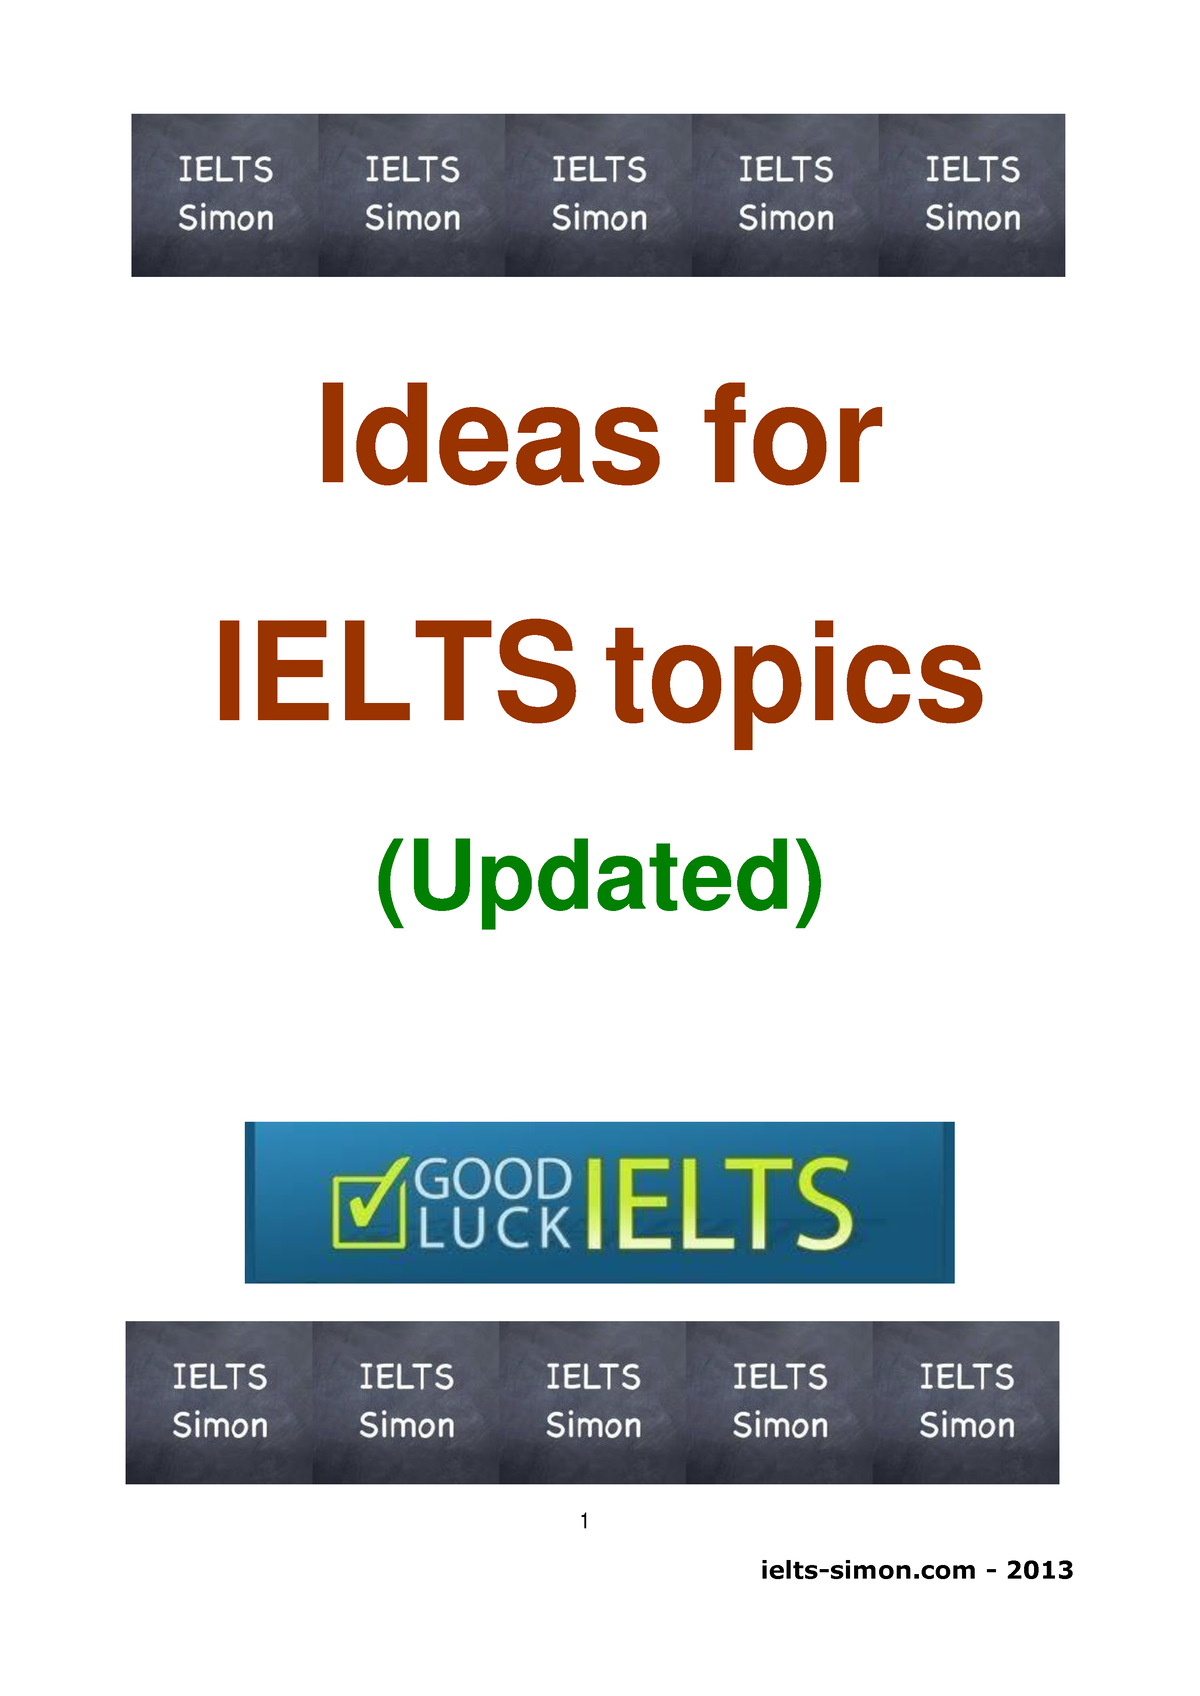 Update topic. Simon IELTS. IELTS topics. Simon IELTS pdf. Ideas for IELTS topics pdf.